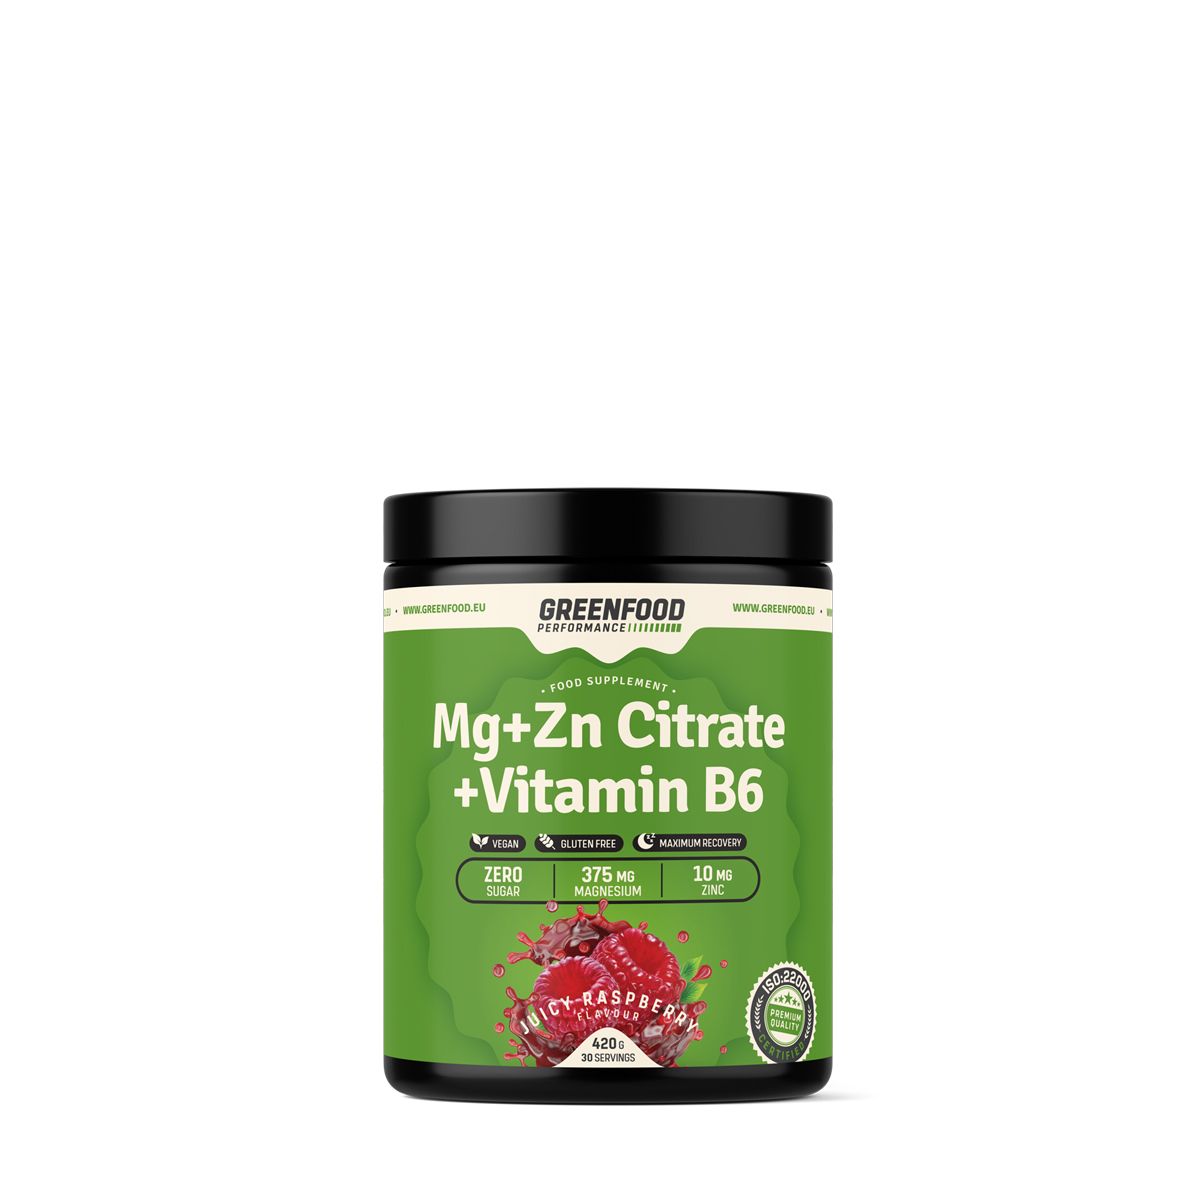 Magnézium és cink citrát italpor B6 vitaminnal, GreenFood Performance Mg + Zn Citrate, 420 g